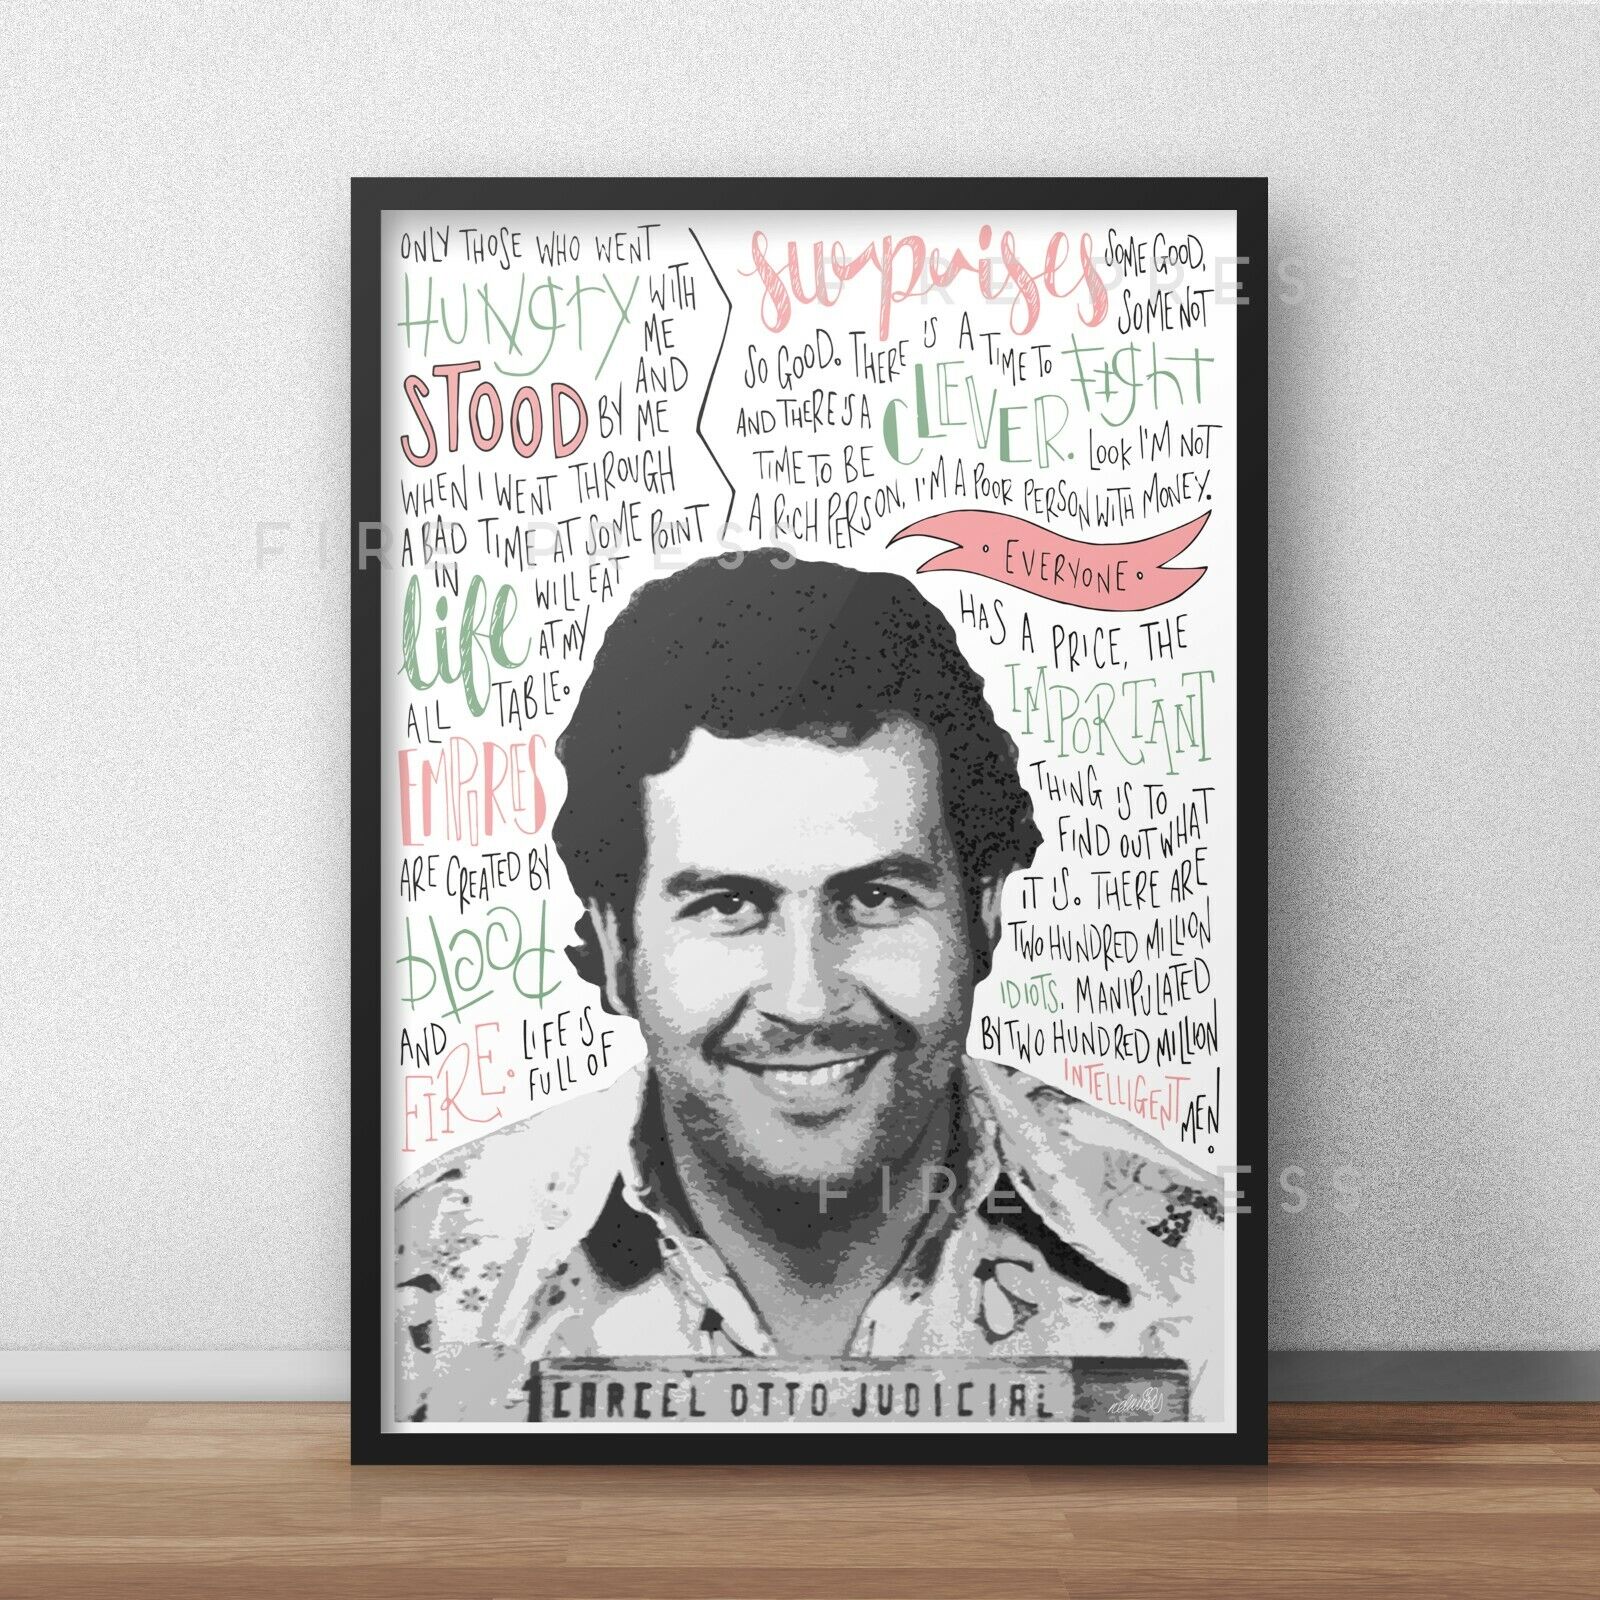 Pablo Escobar Poster / Print / Wall Art A5 A4 A3 / Columbia Drug Cartel / Mexico